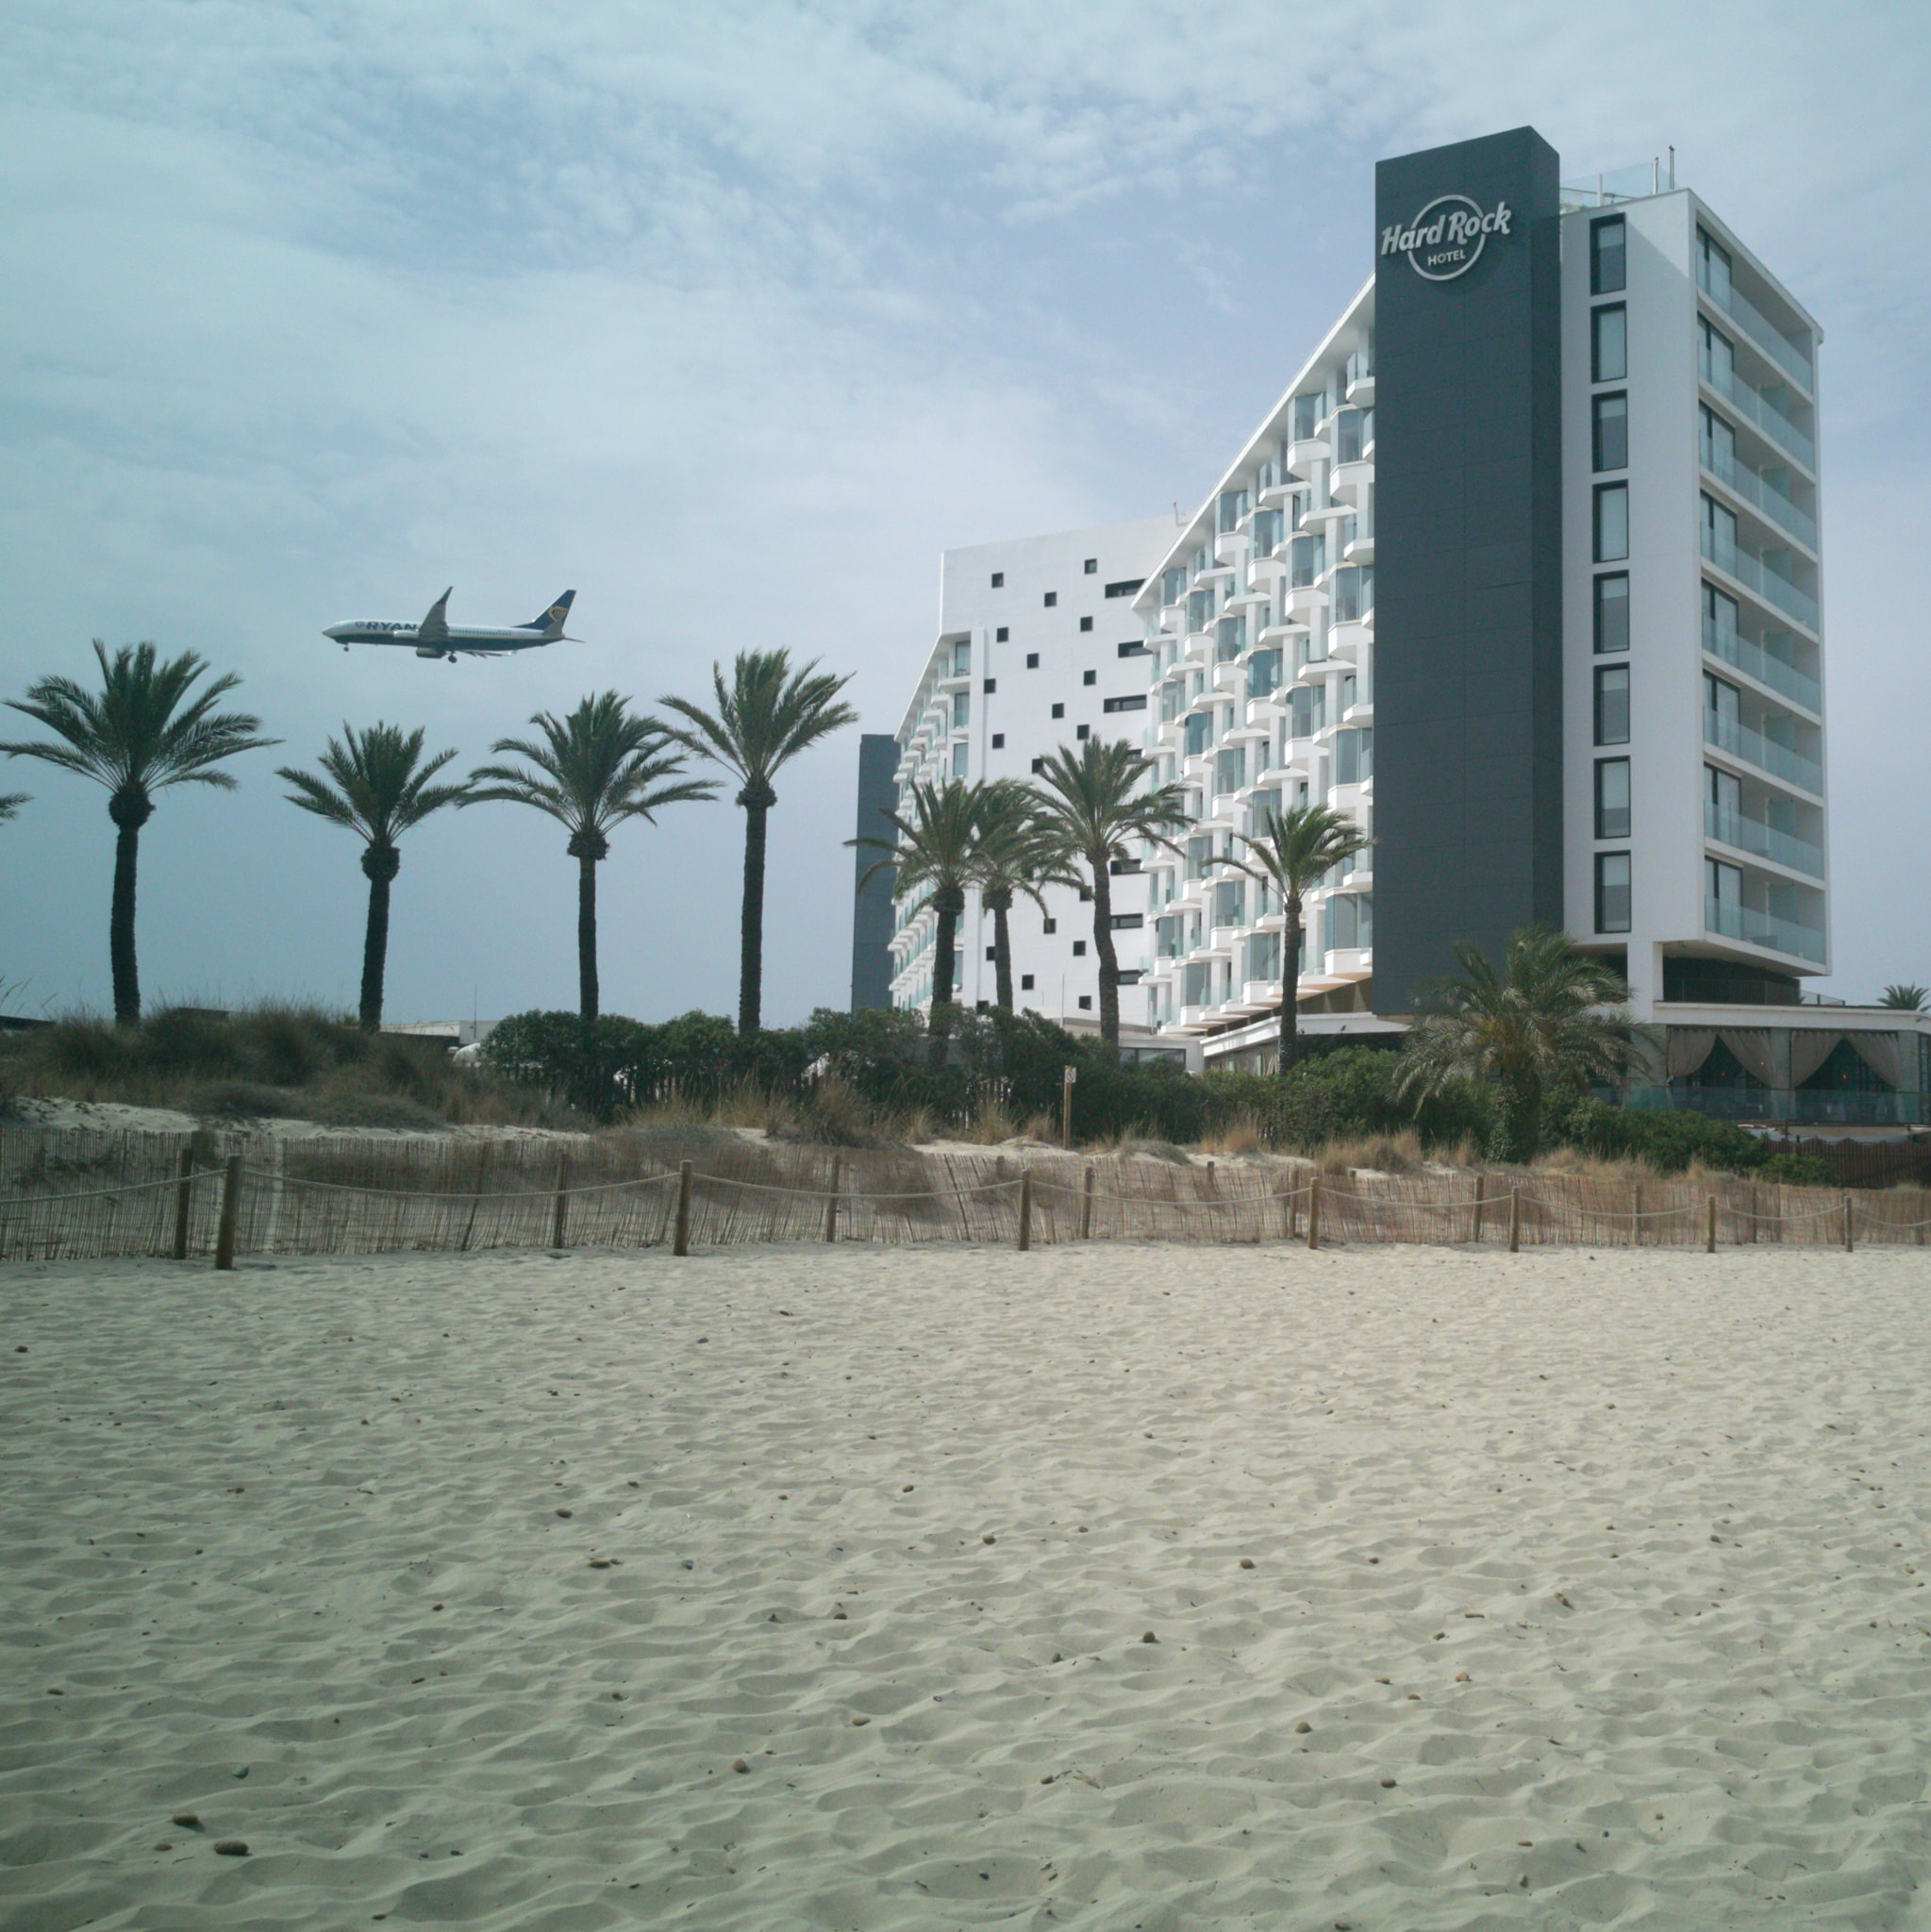 RyanAir passes the Hard Rock Cafe Hotel, Playa Den Bossa, Ibiza